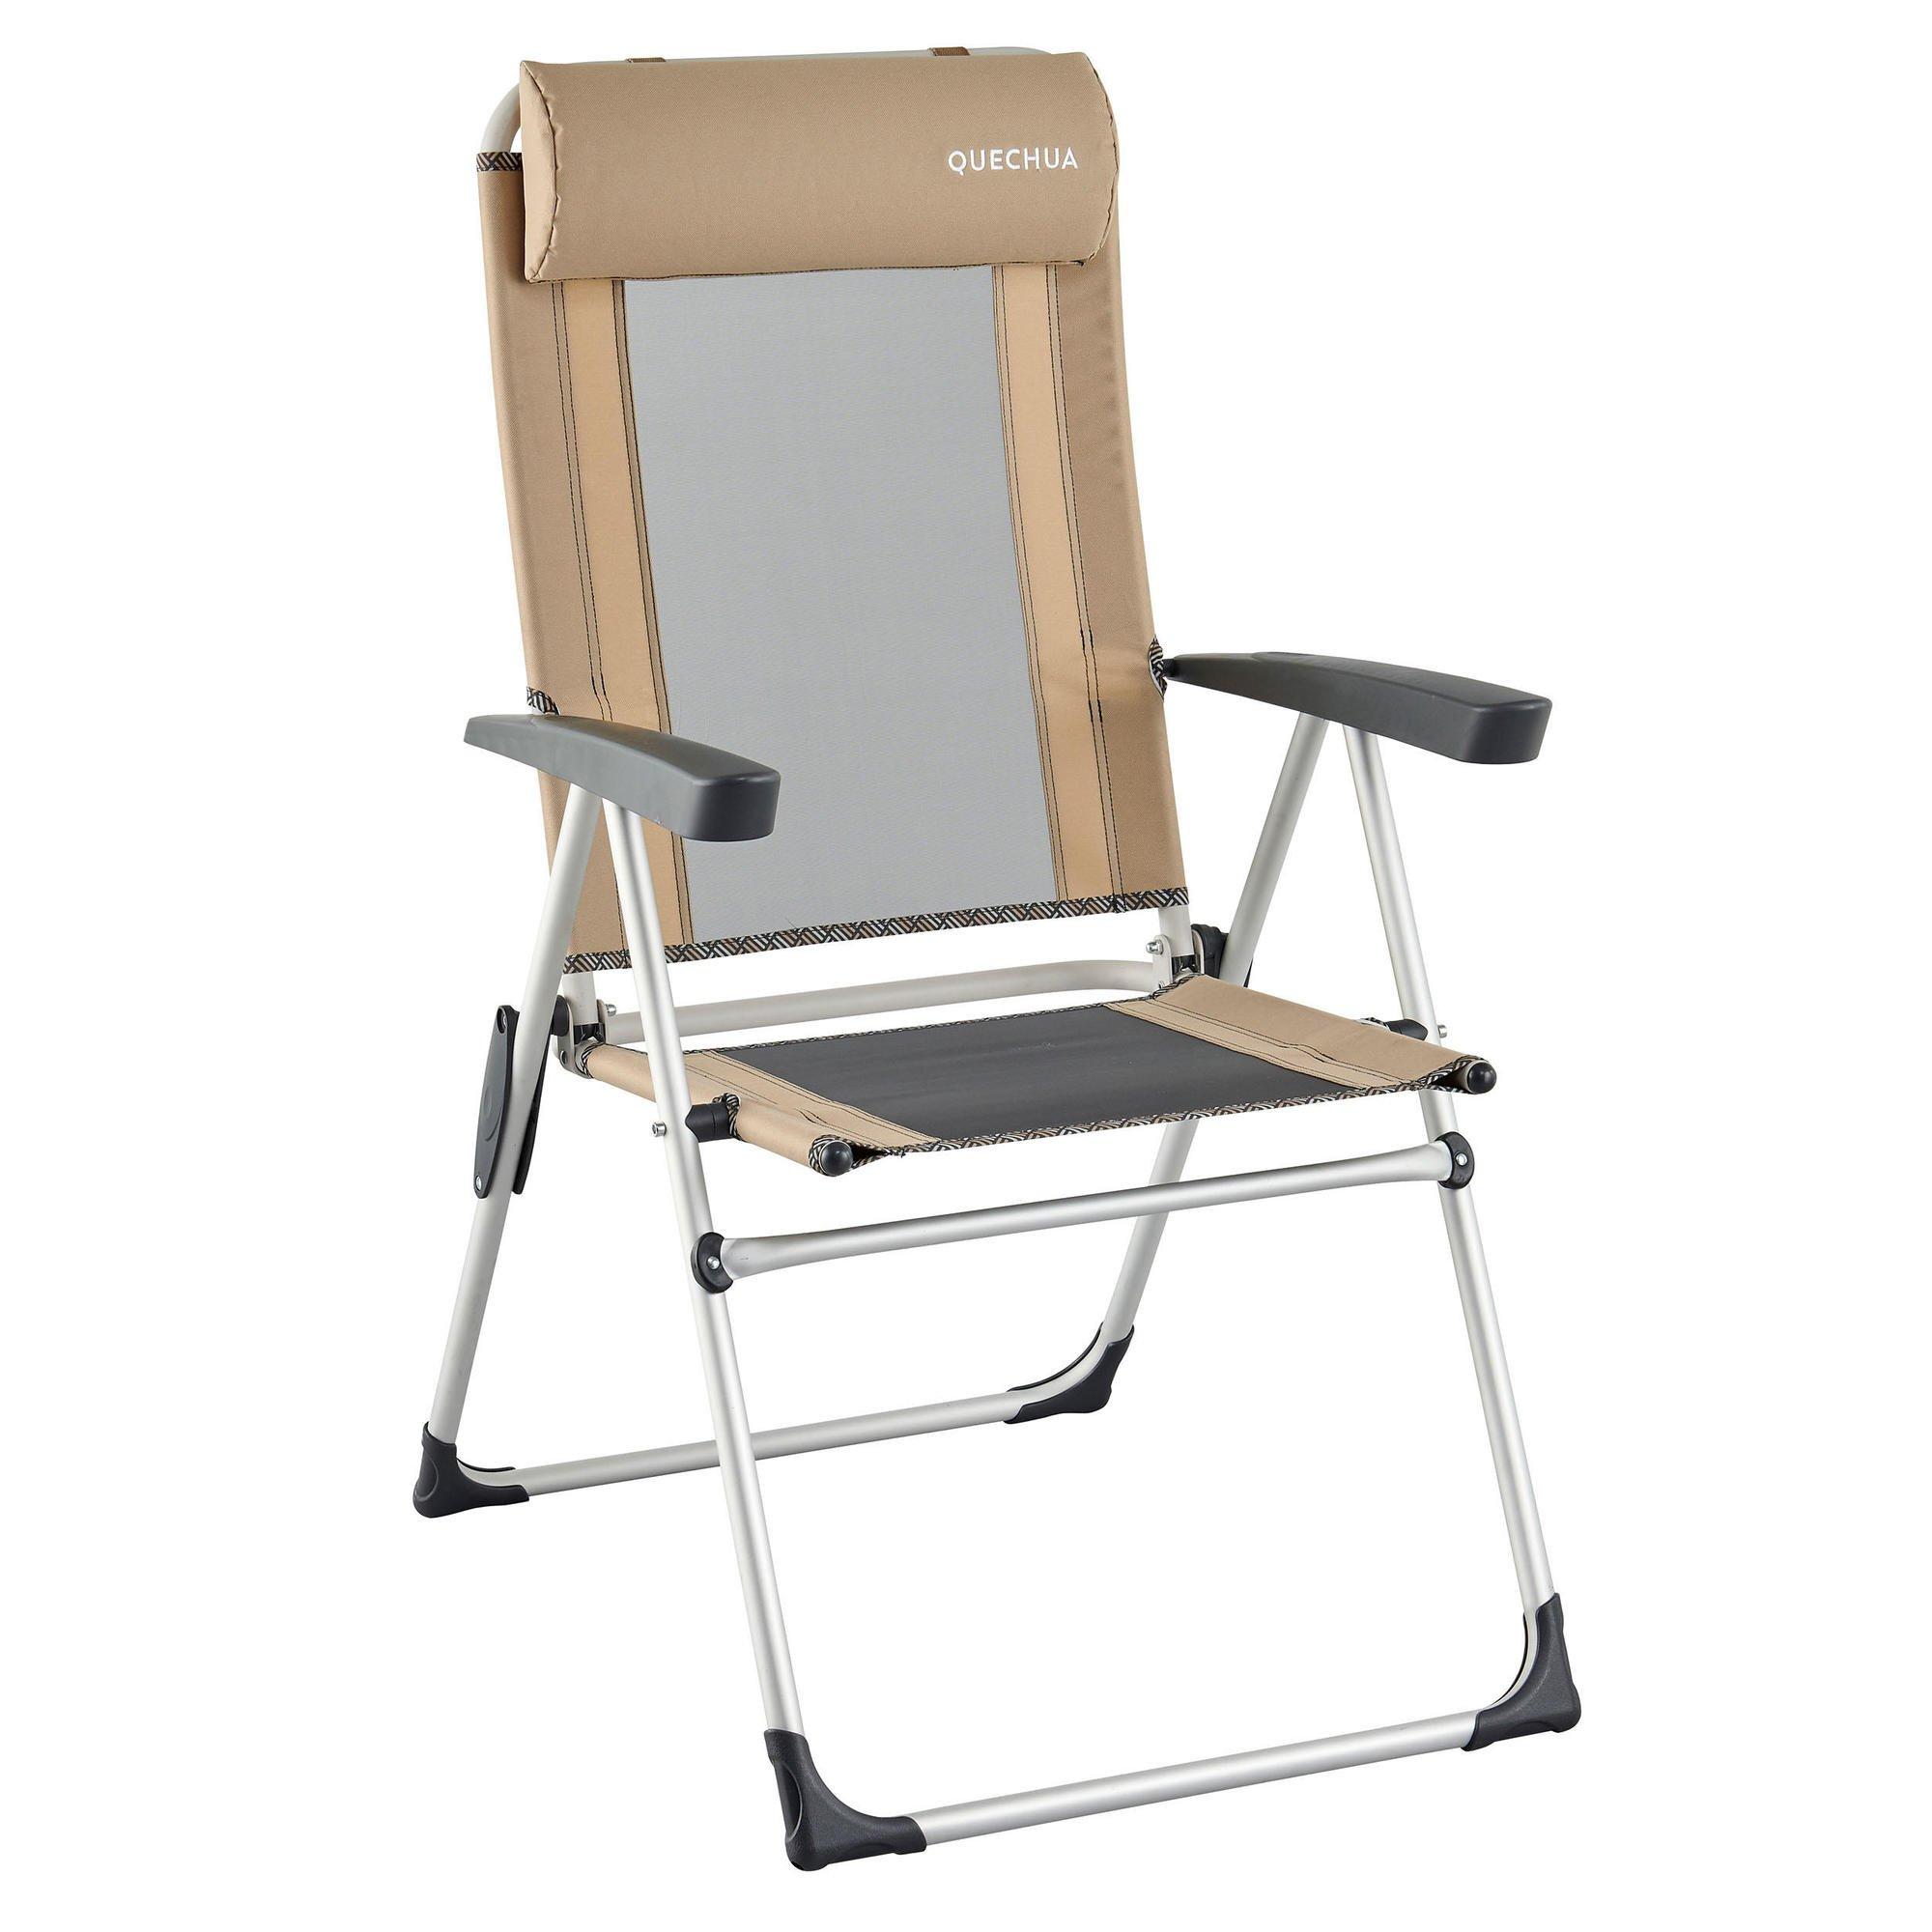 Decathlon Folding Reclining Camping Chair